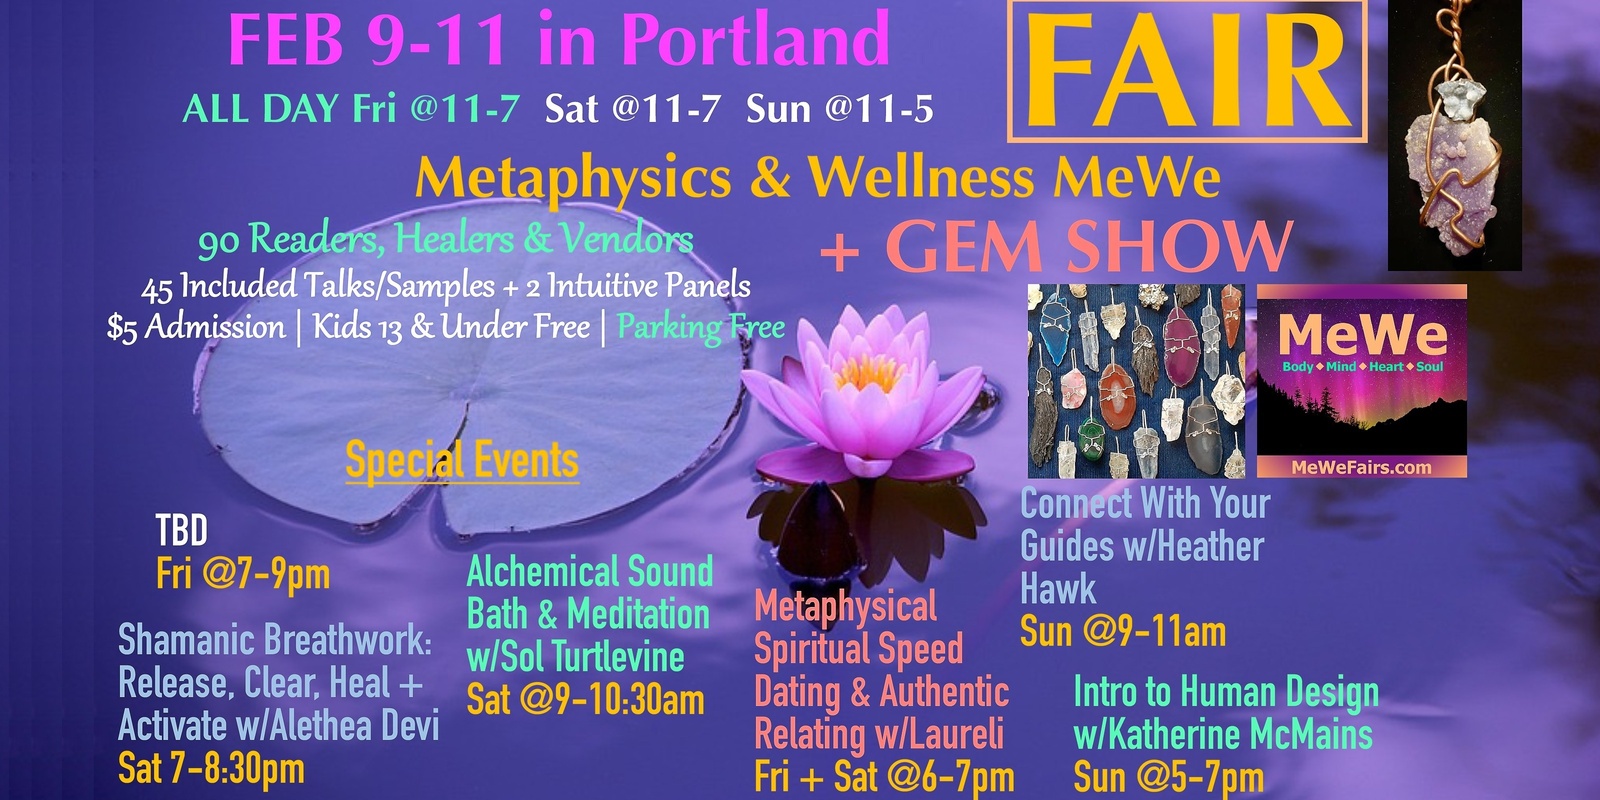 Banner image for MeWe Metaphysics & Wellness Fair + Gem Show in Portland Feb 9-11